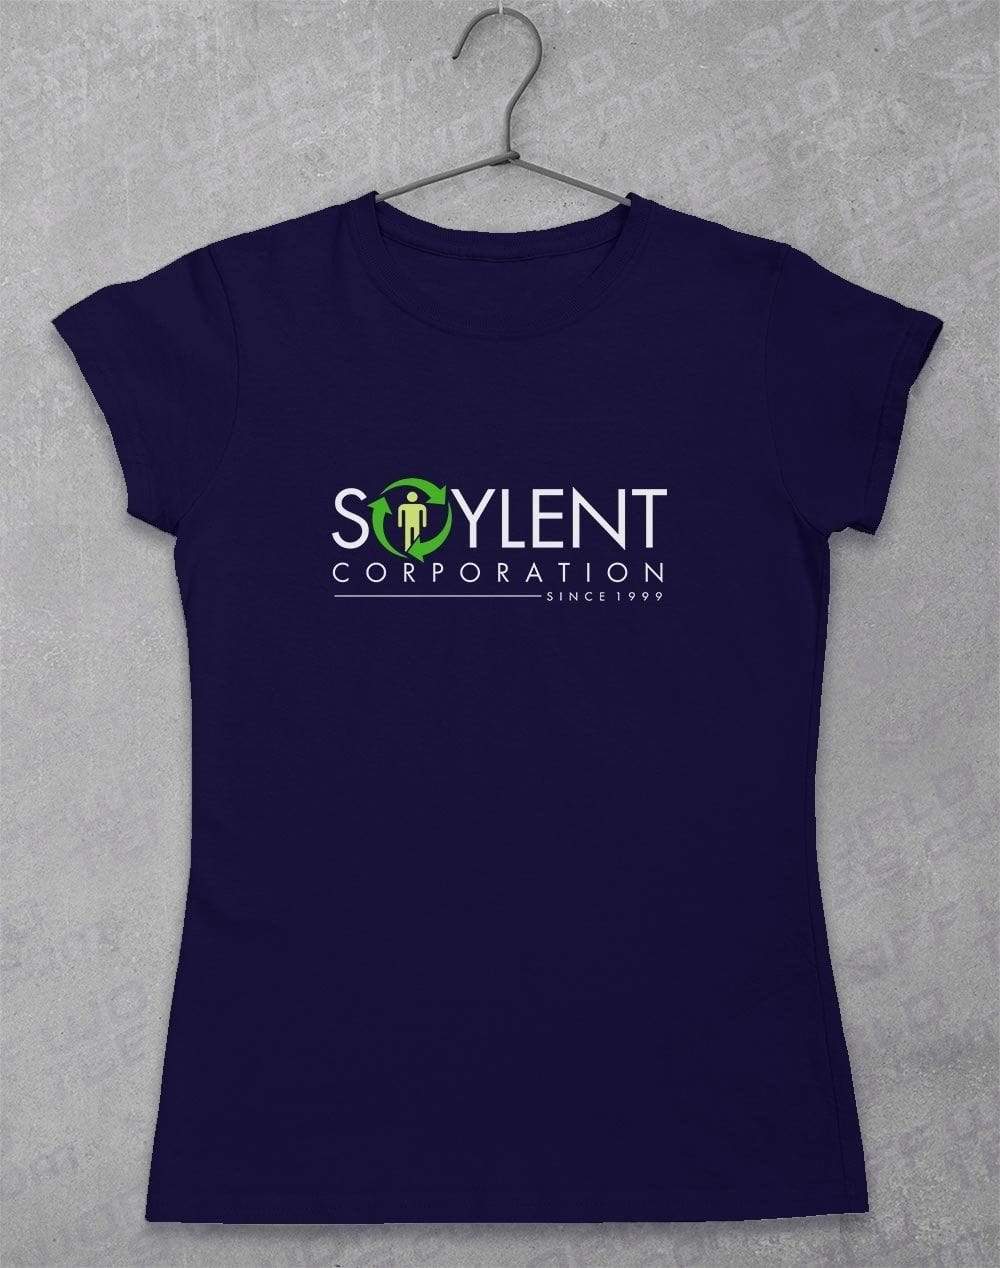 Soylent Corporation - Women's T-Shirt 8-10 / Navy  - Off World Tees